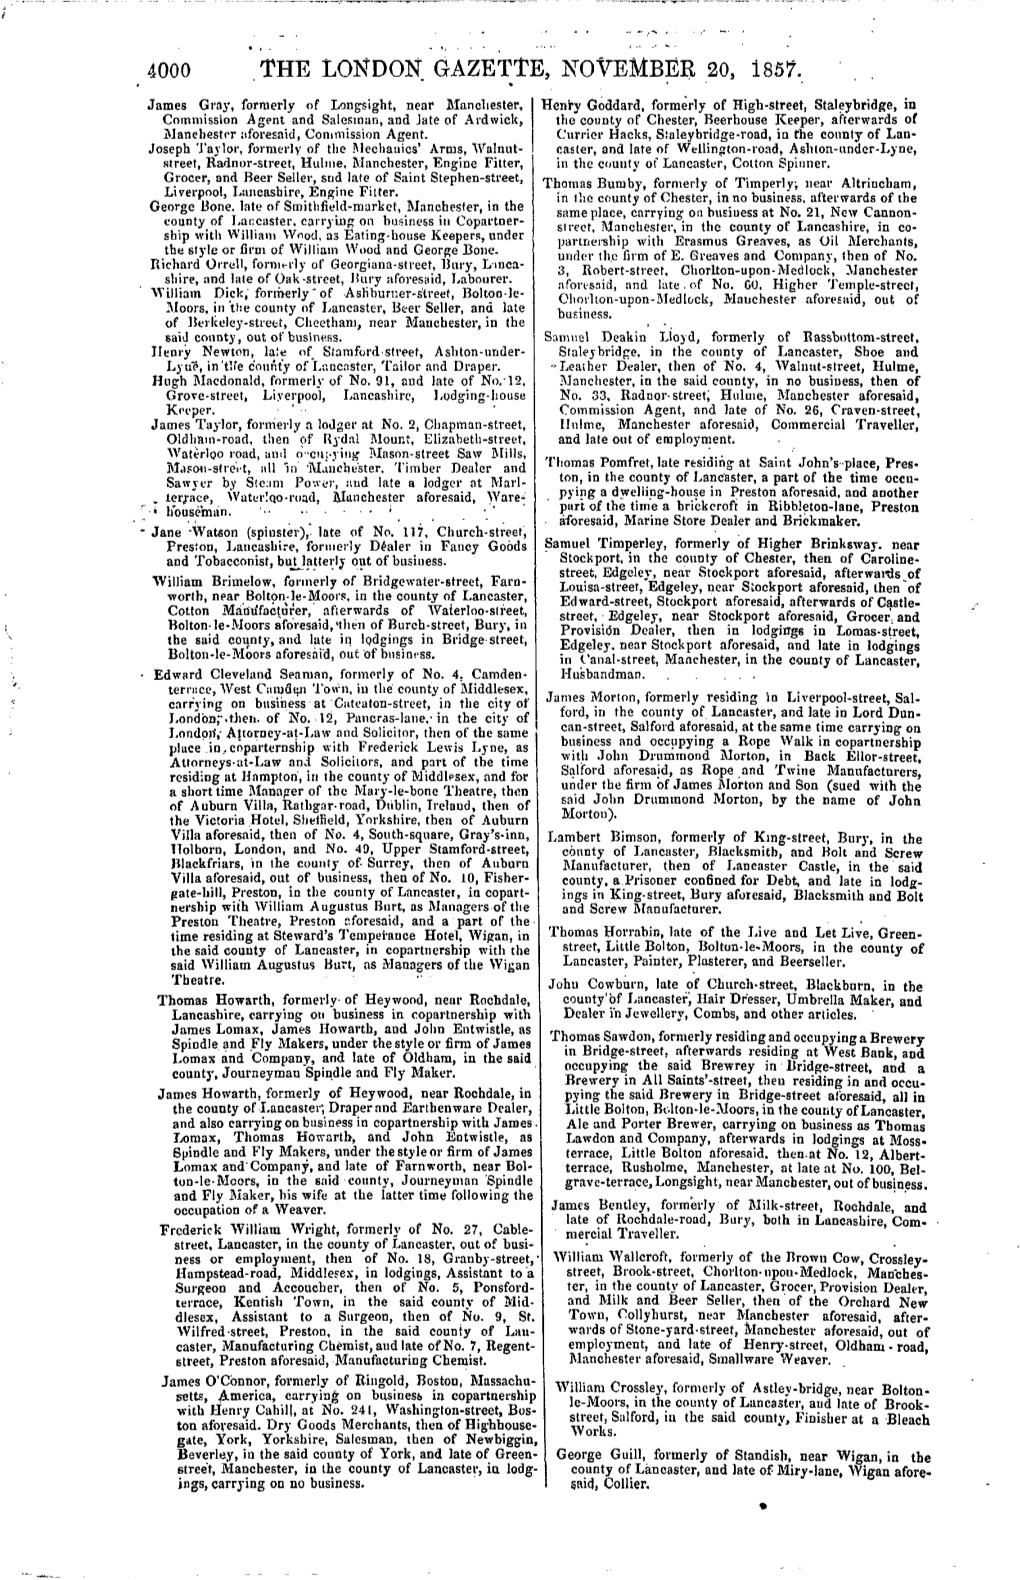 The London Gazette, November 20, 1857